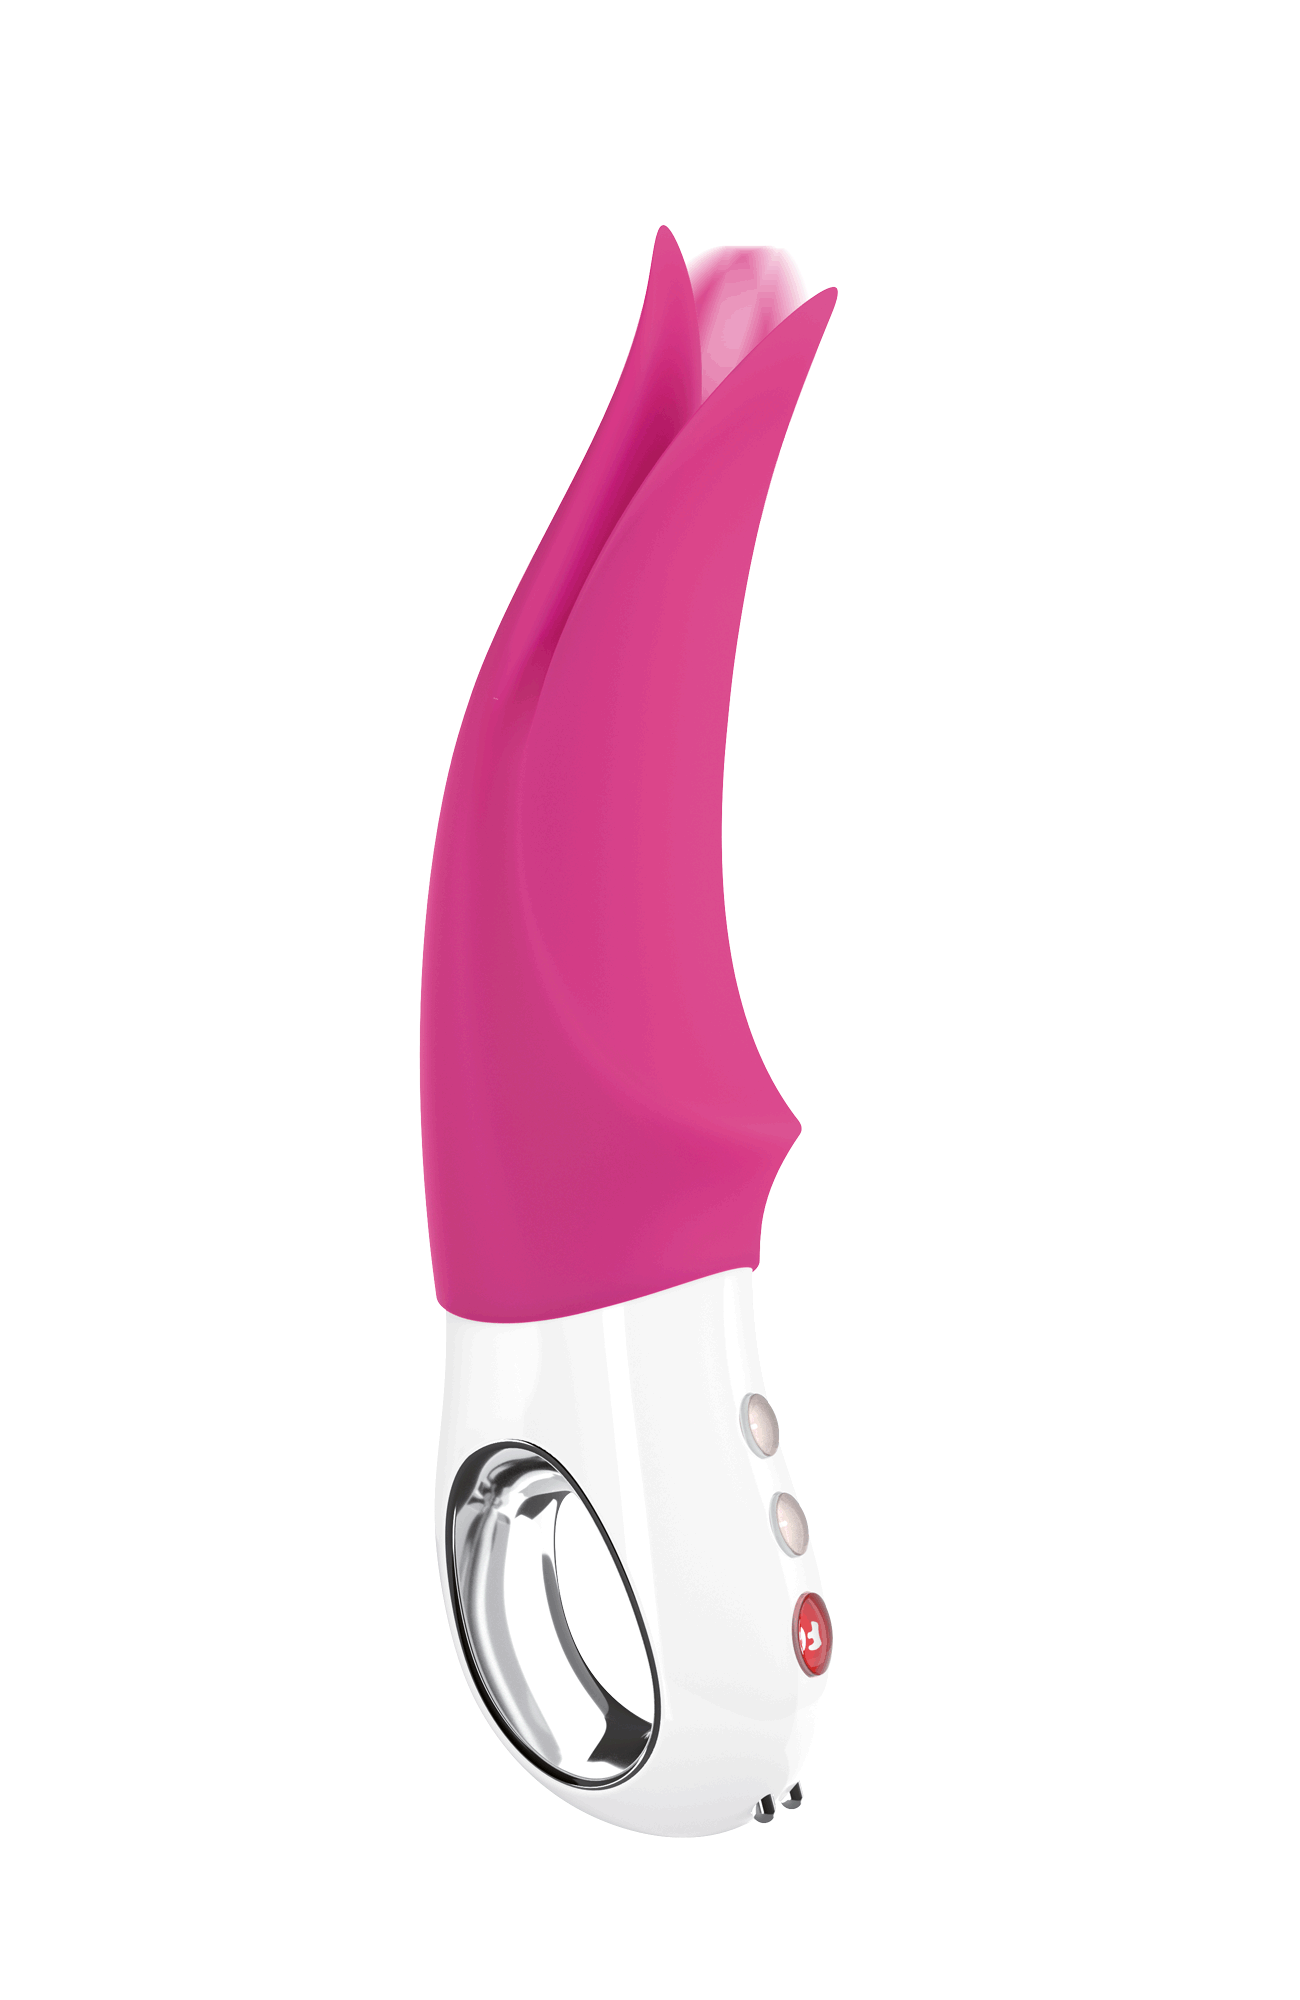 Fun Factory - Volta Clit Massager (Pink) -  Clit Massager (Vibration) Rechargeable  Durio.sg